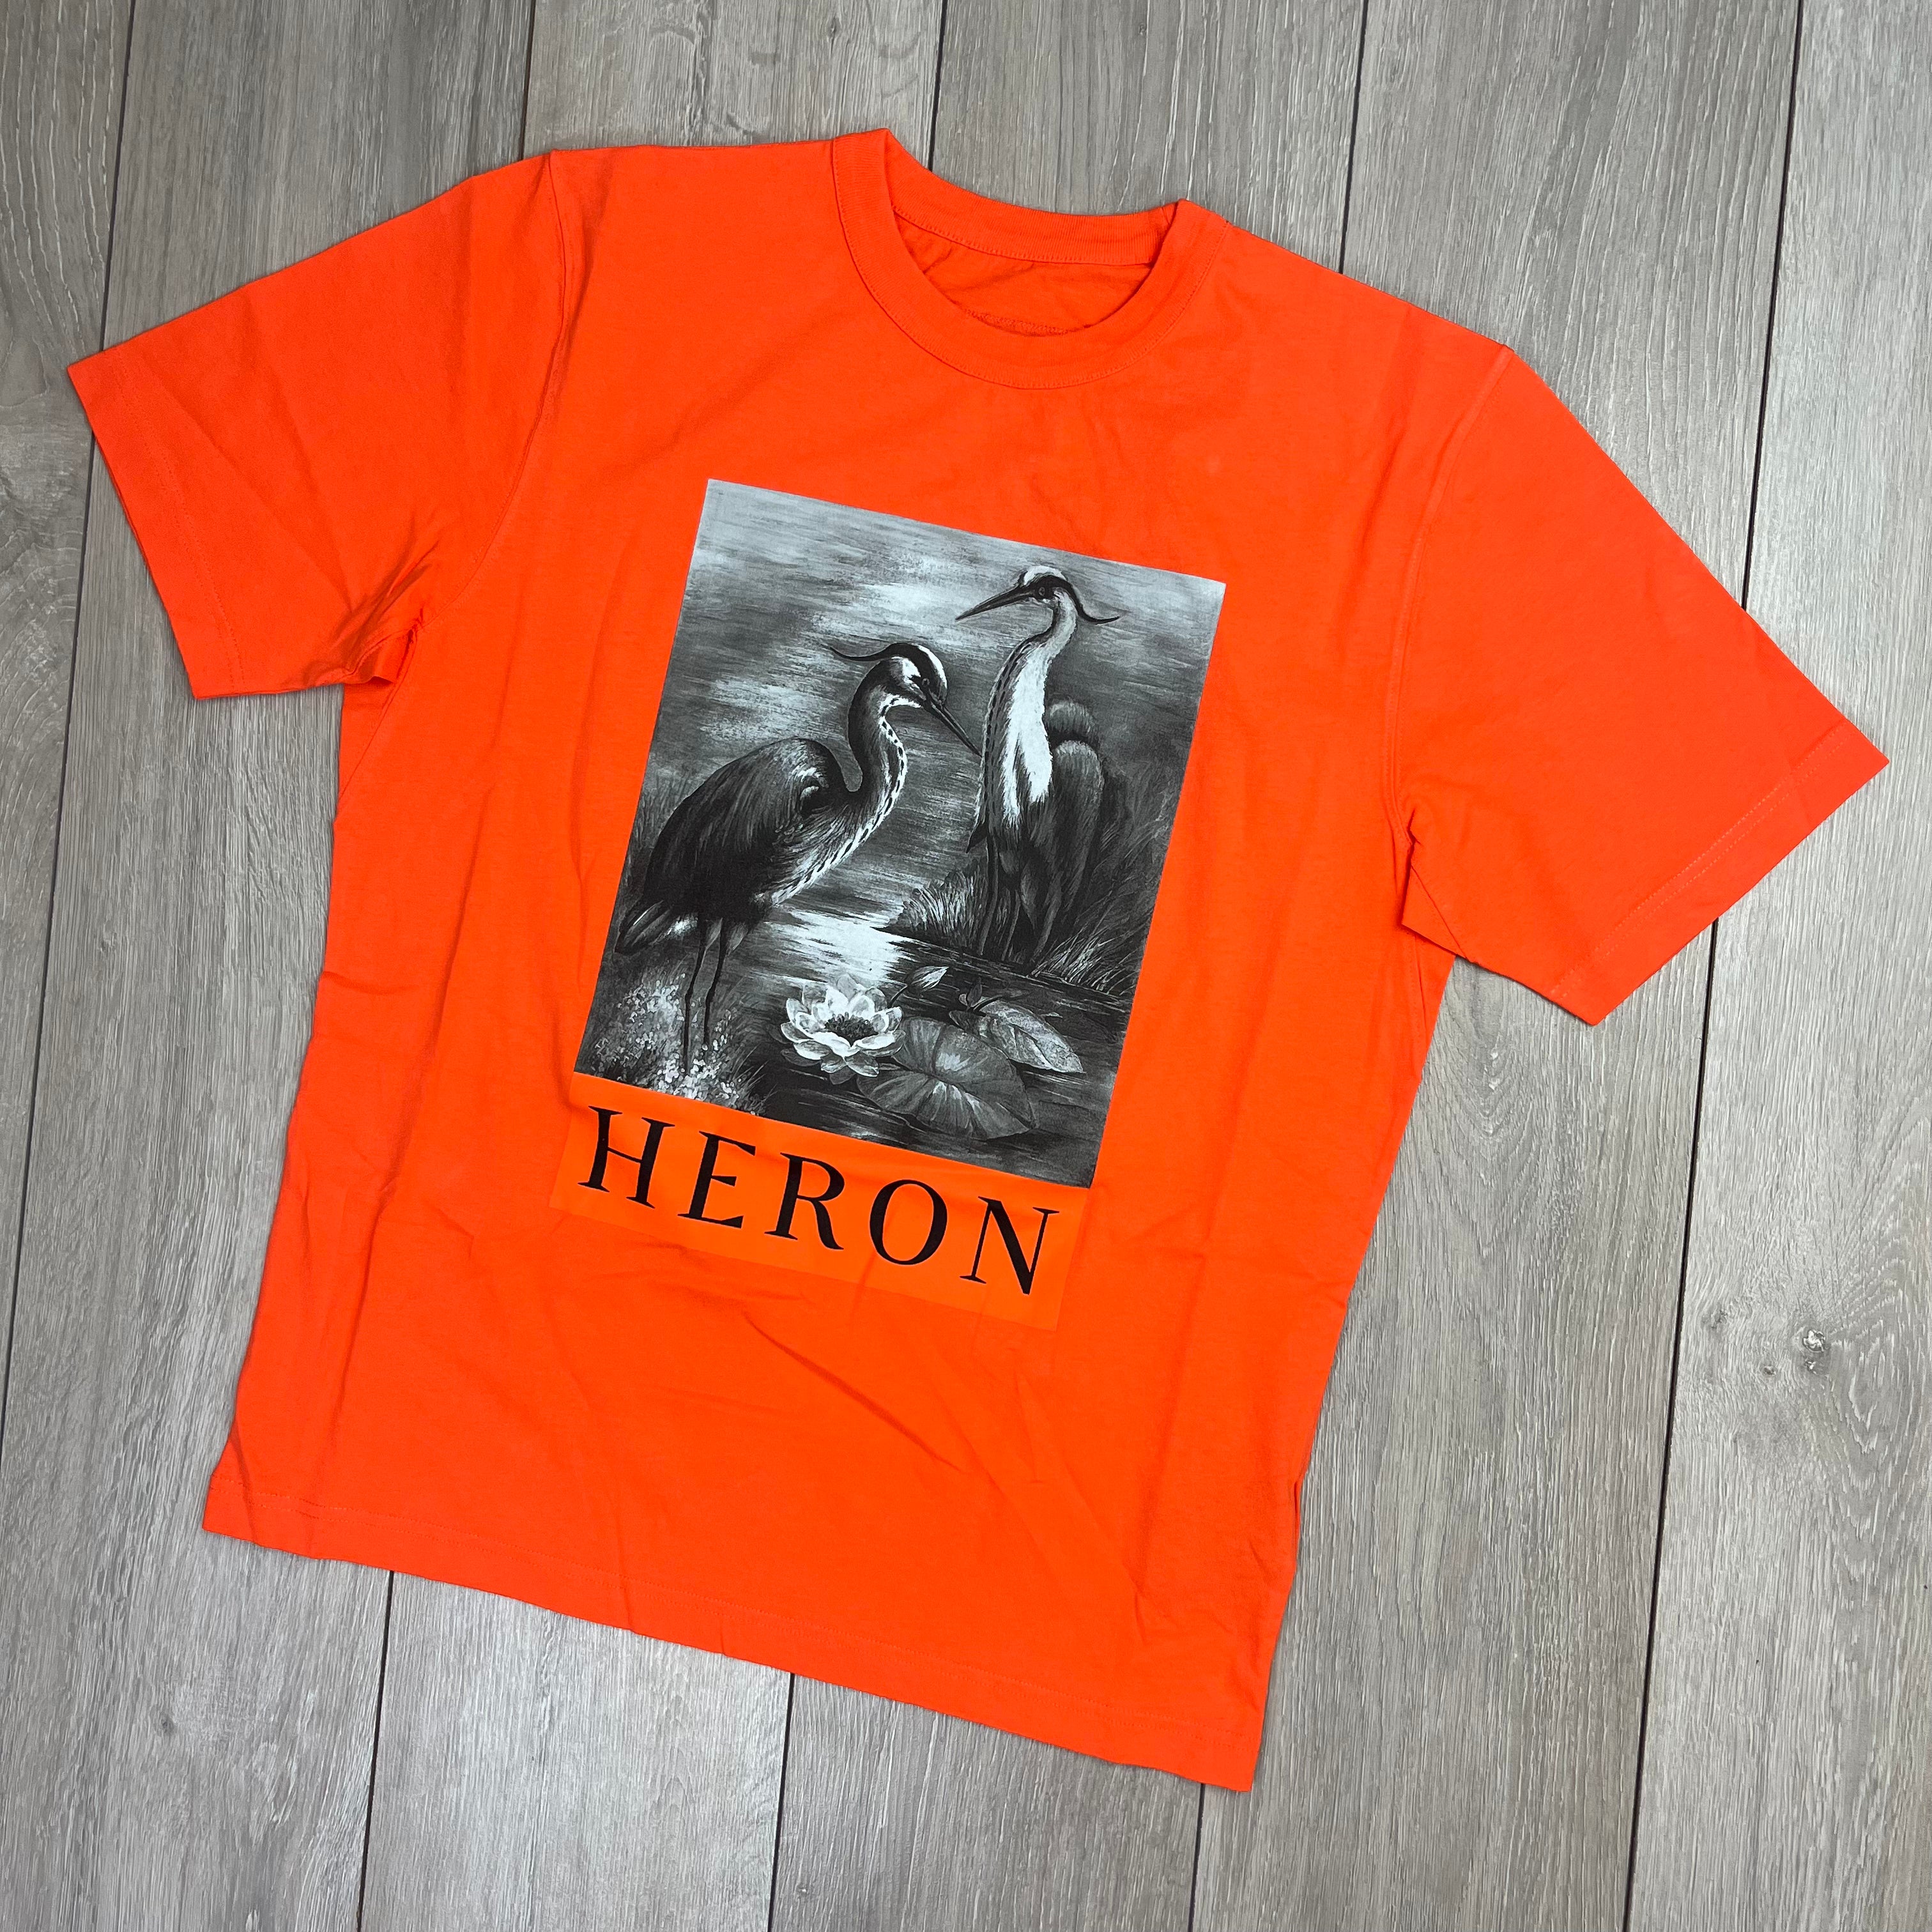 Heron Preston Graphic T-Shirt